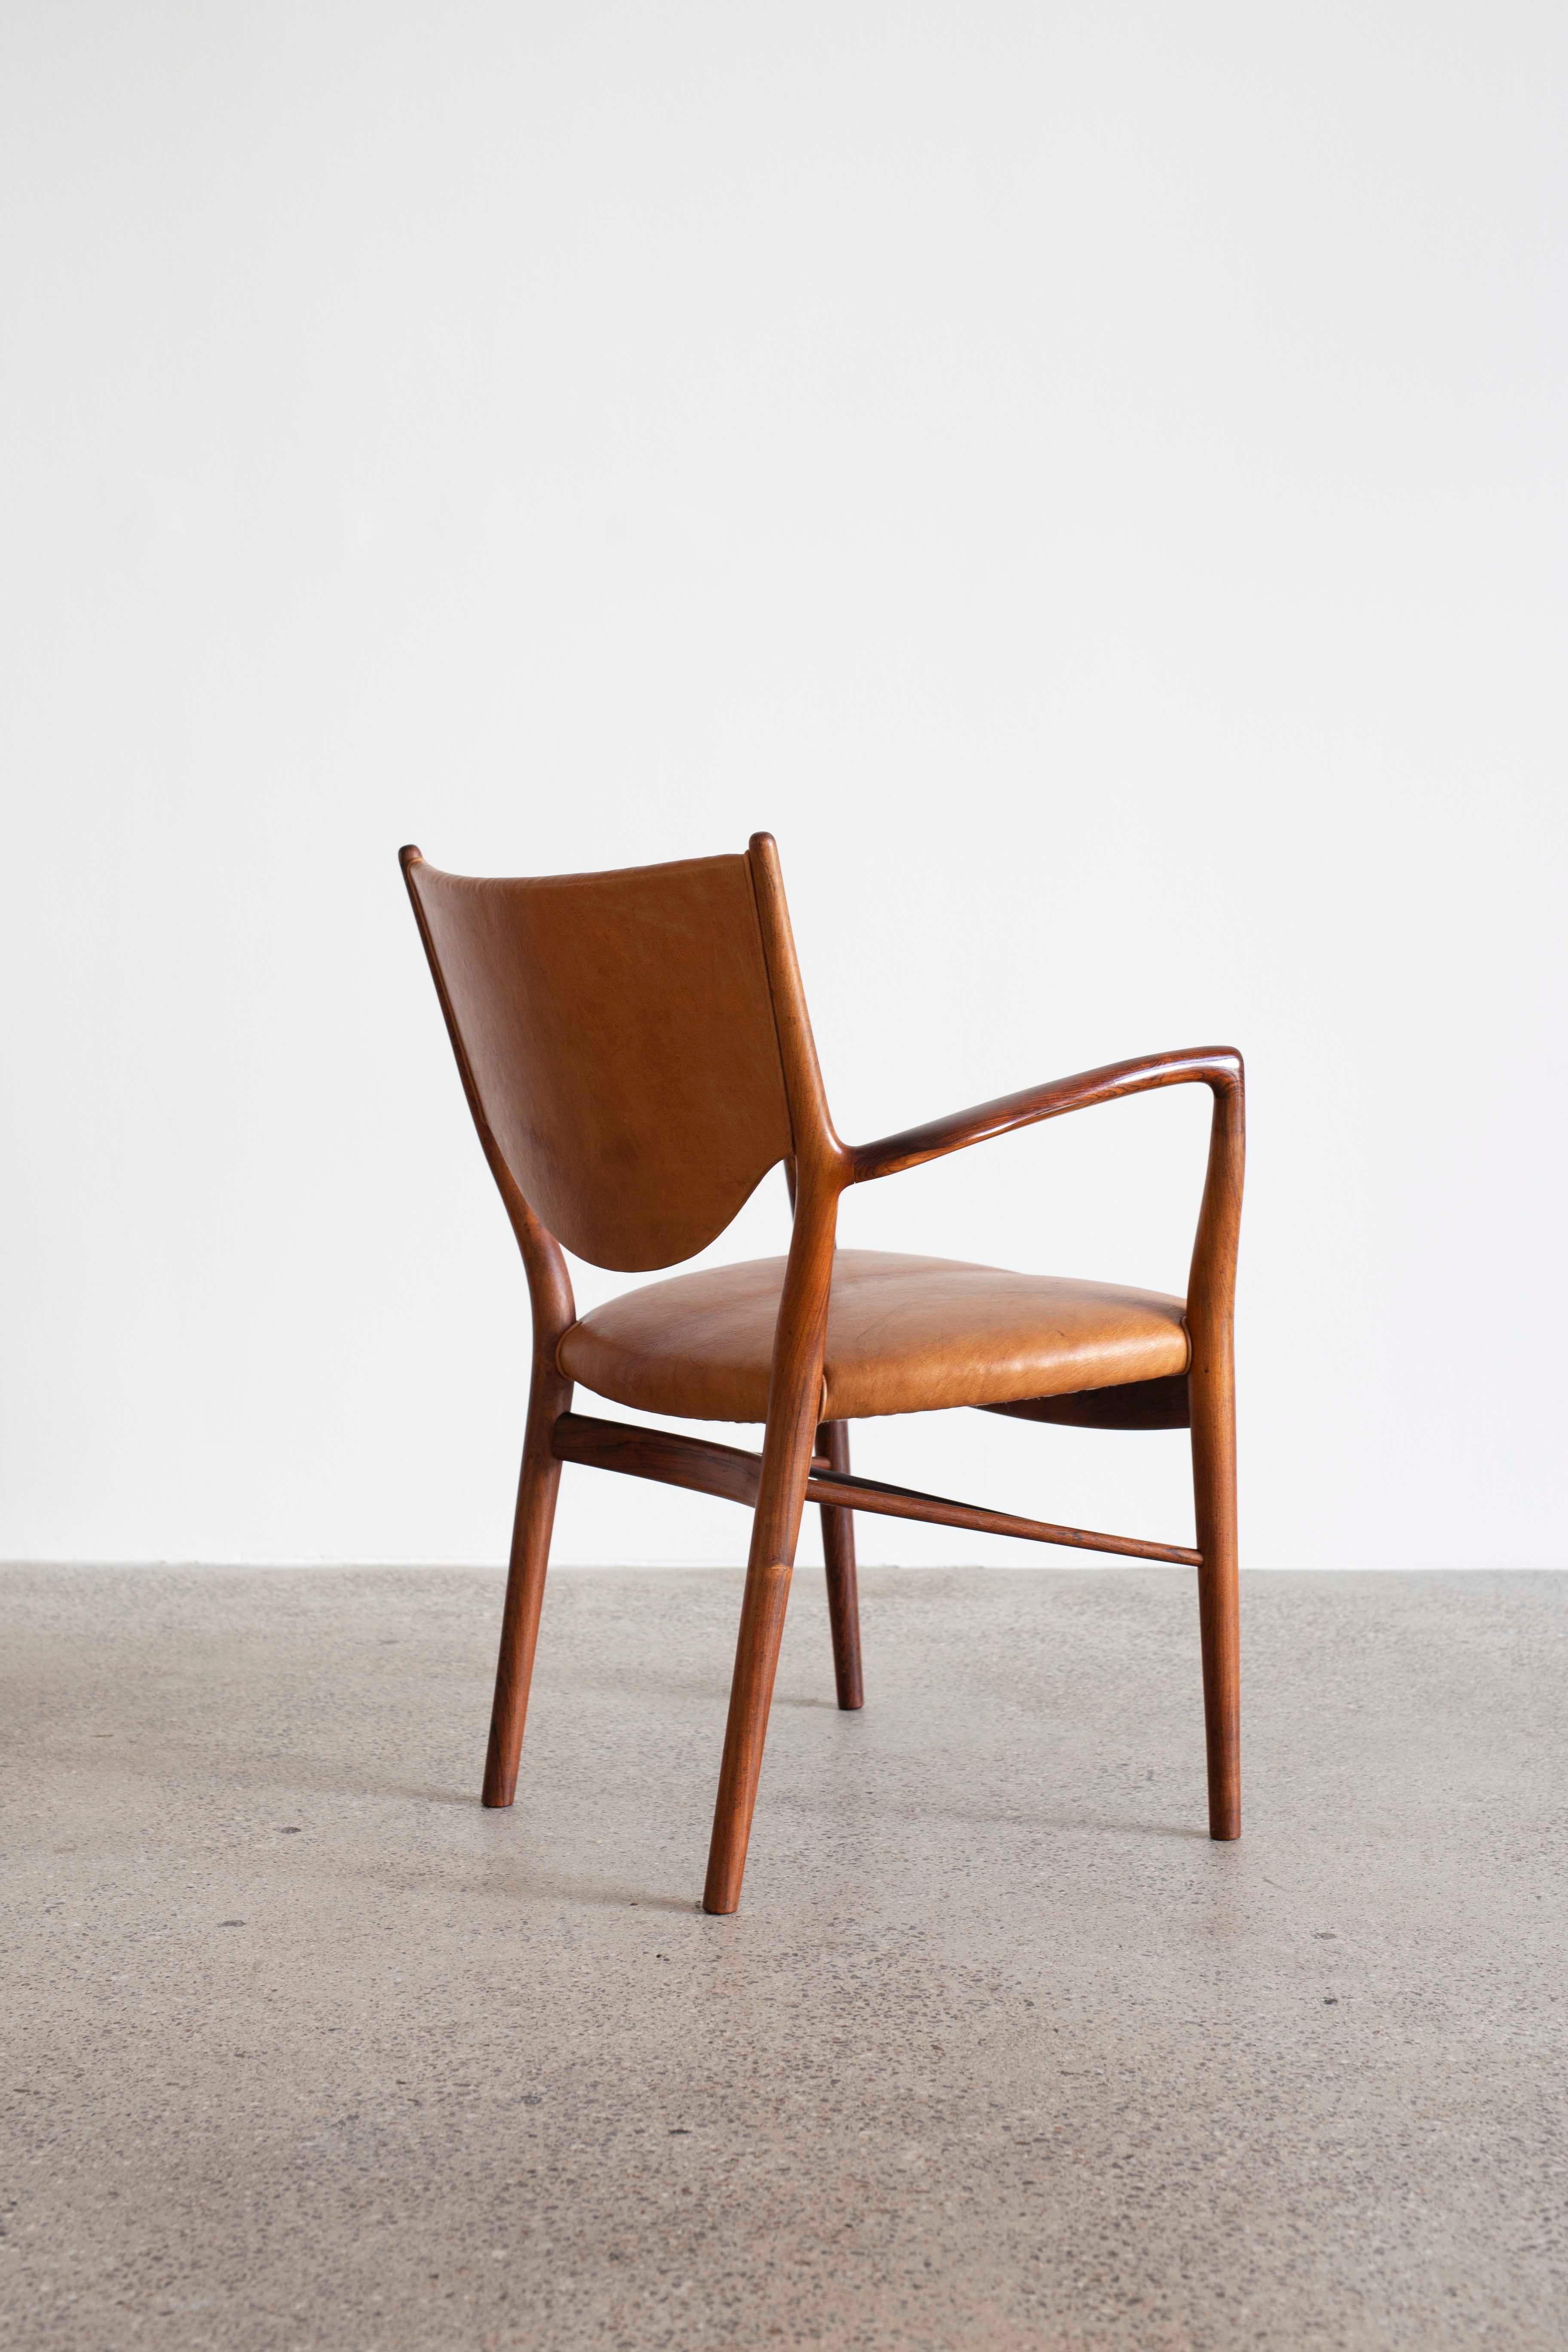 Finn Juhl NV46 Chair in Rosewood for Niels Vodder In Good Condition For Sale In Copenhagen, DK